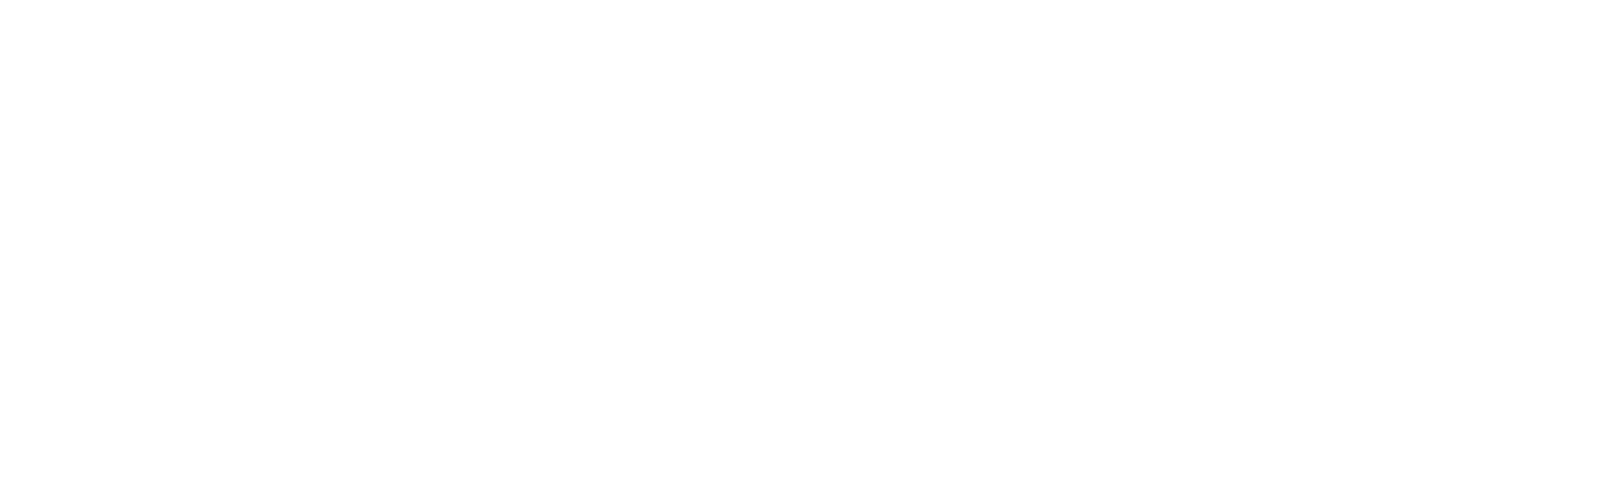 GPE Transforming Education Logo